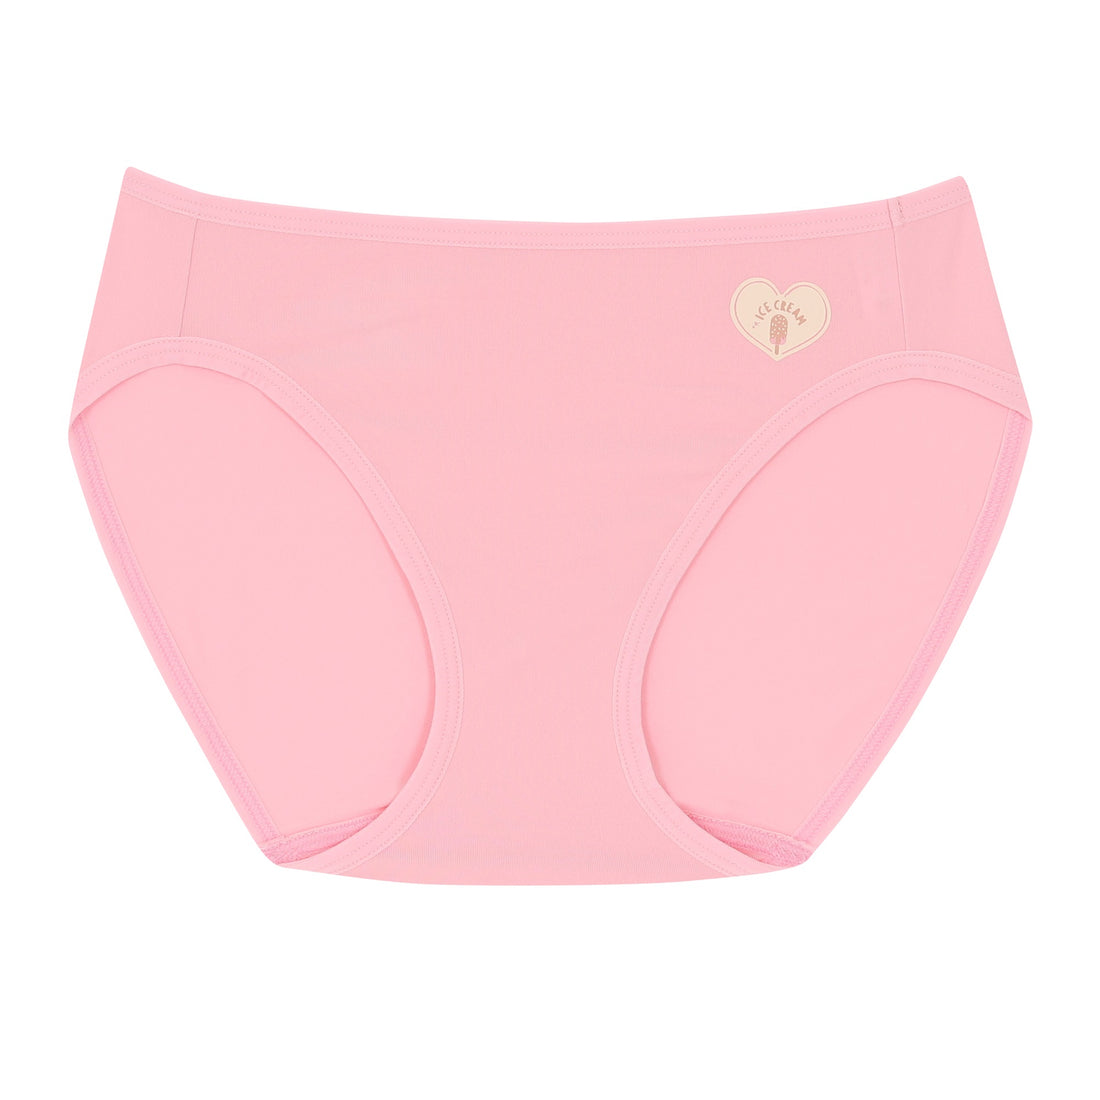 Wacoal Panty, bikini style underwear, model WU2C04, pink (OR)